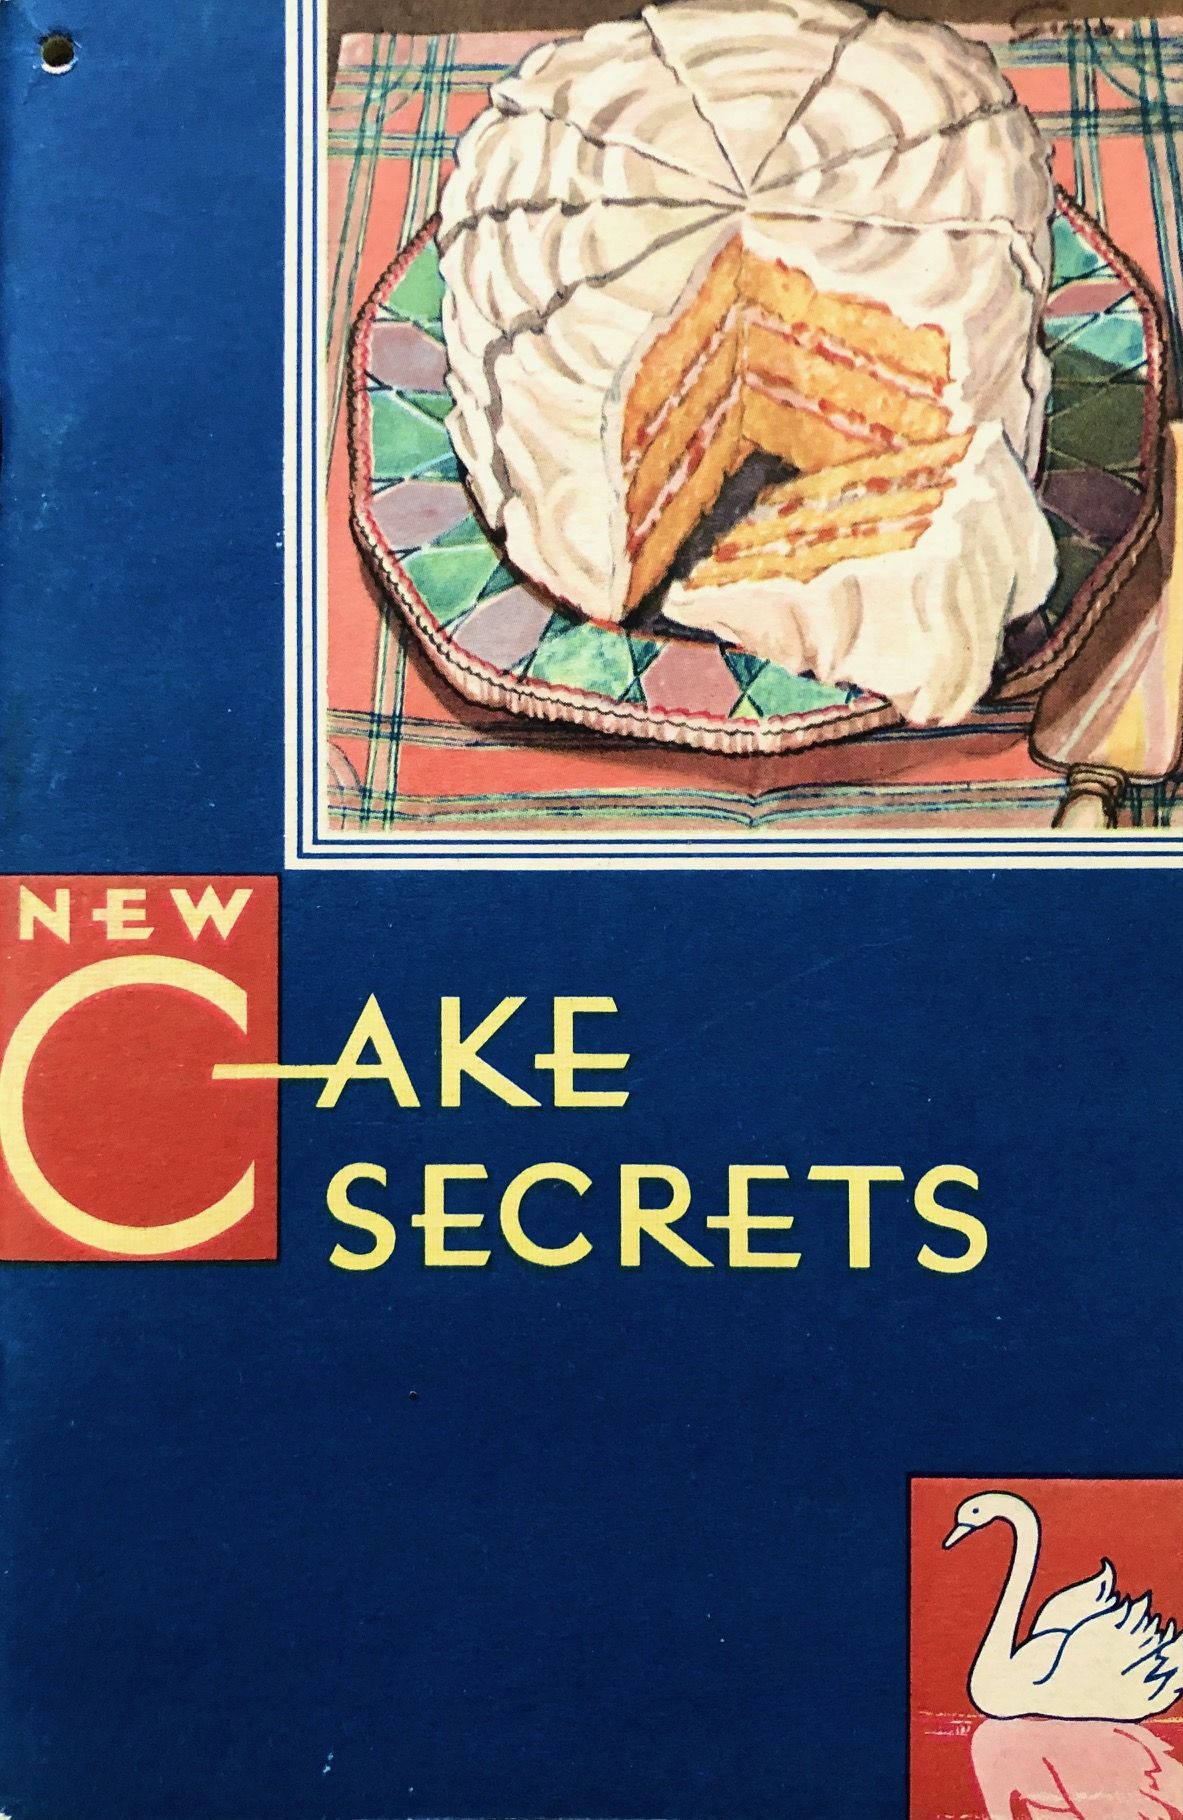 (*NEW ARRIVAL*) (Baking) Frances Lee Barton. New Cake Secrets